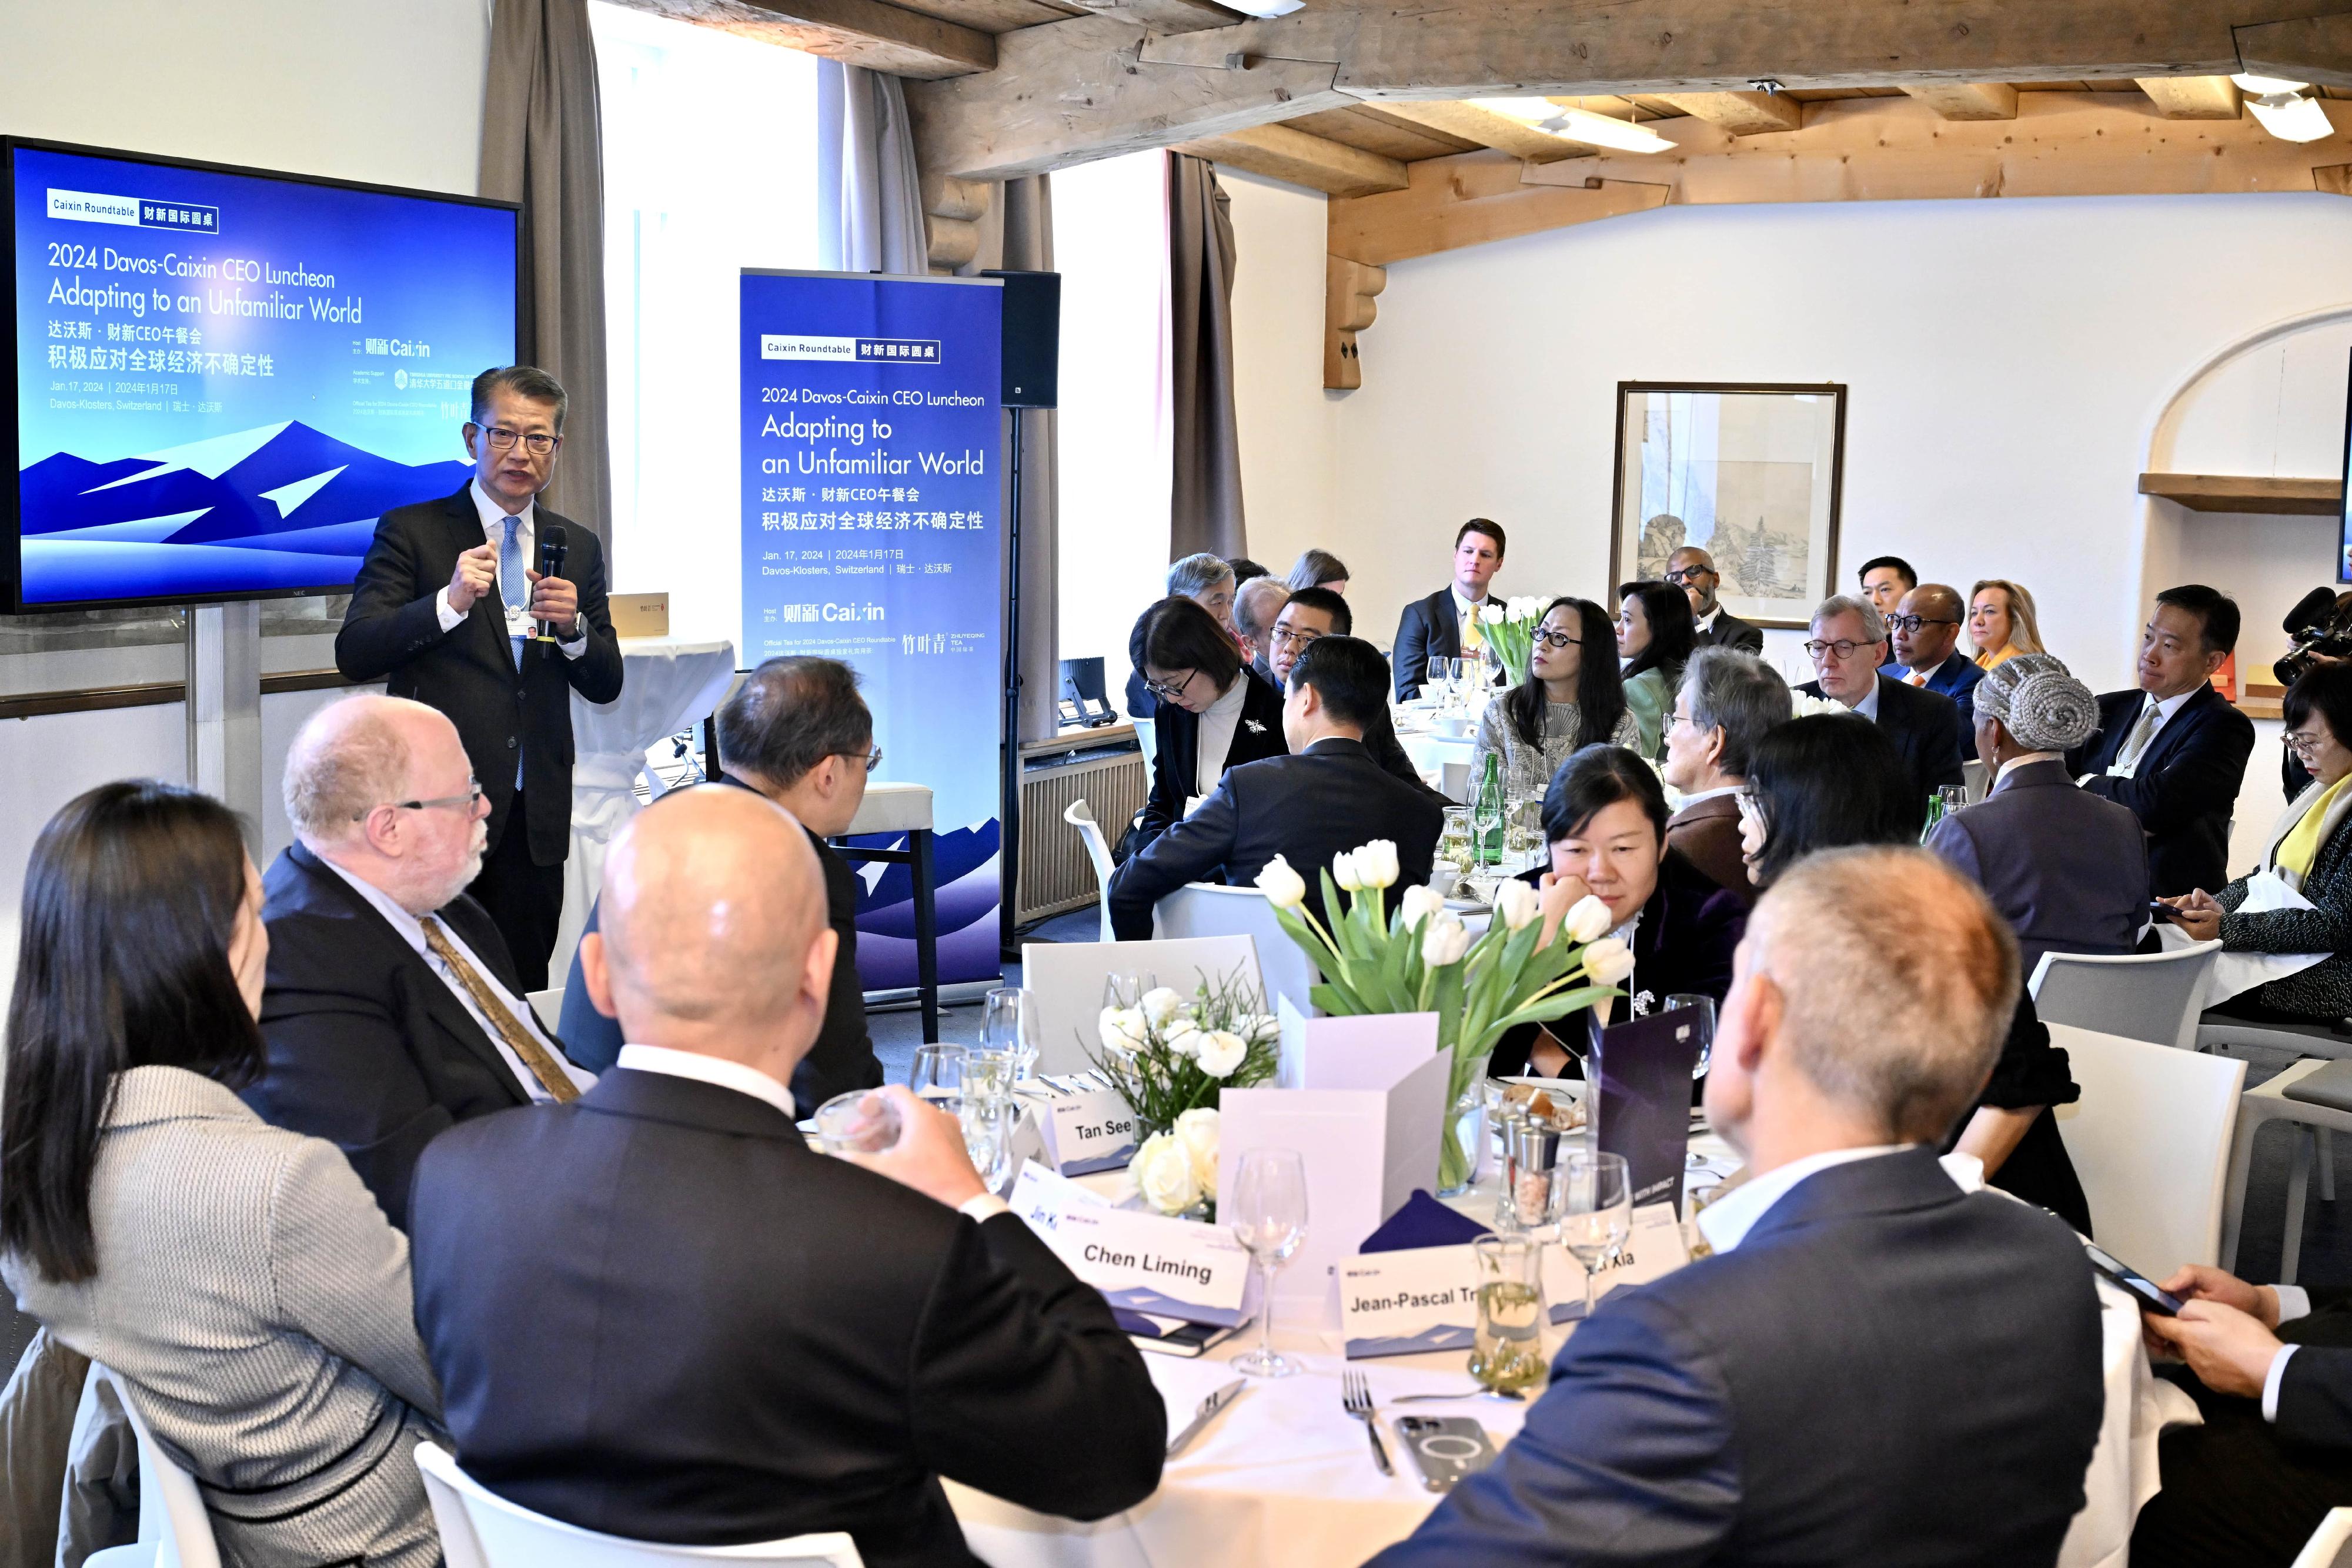 Speech by Financial Secretary at 2024 Davos-Caixin CEO Luncheon